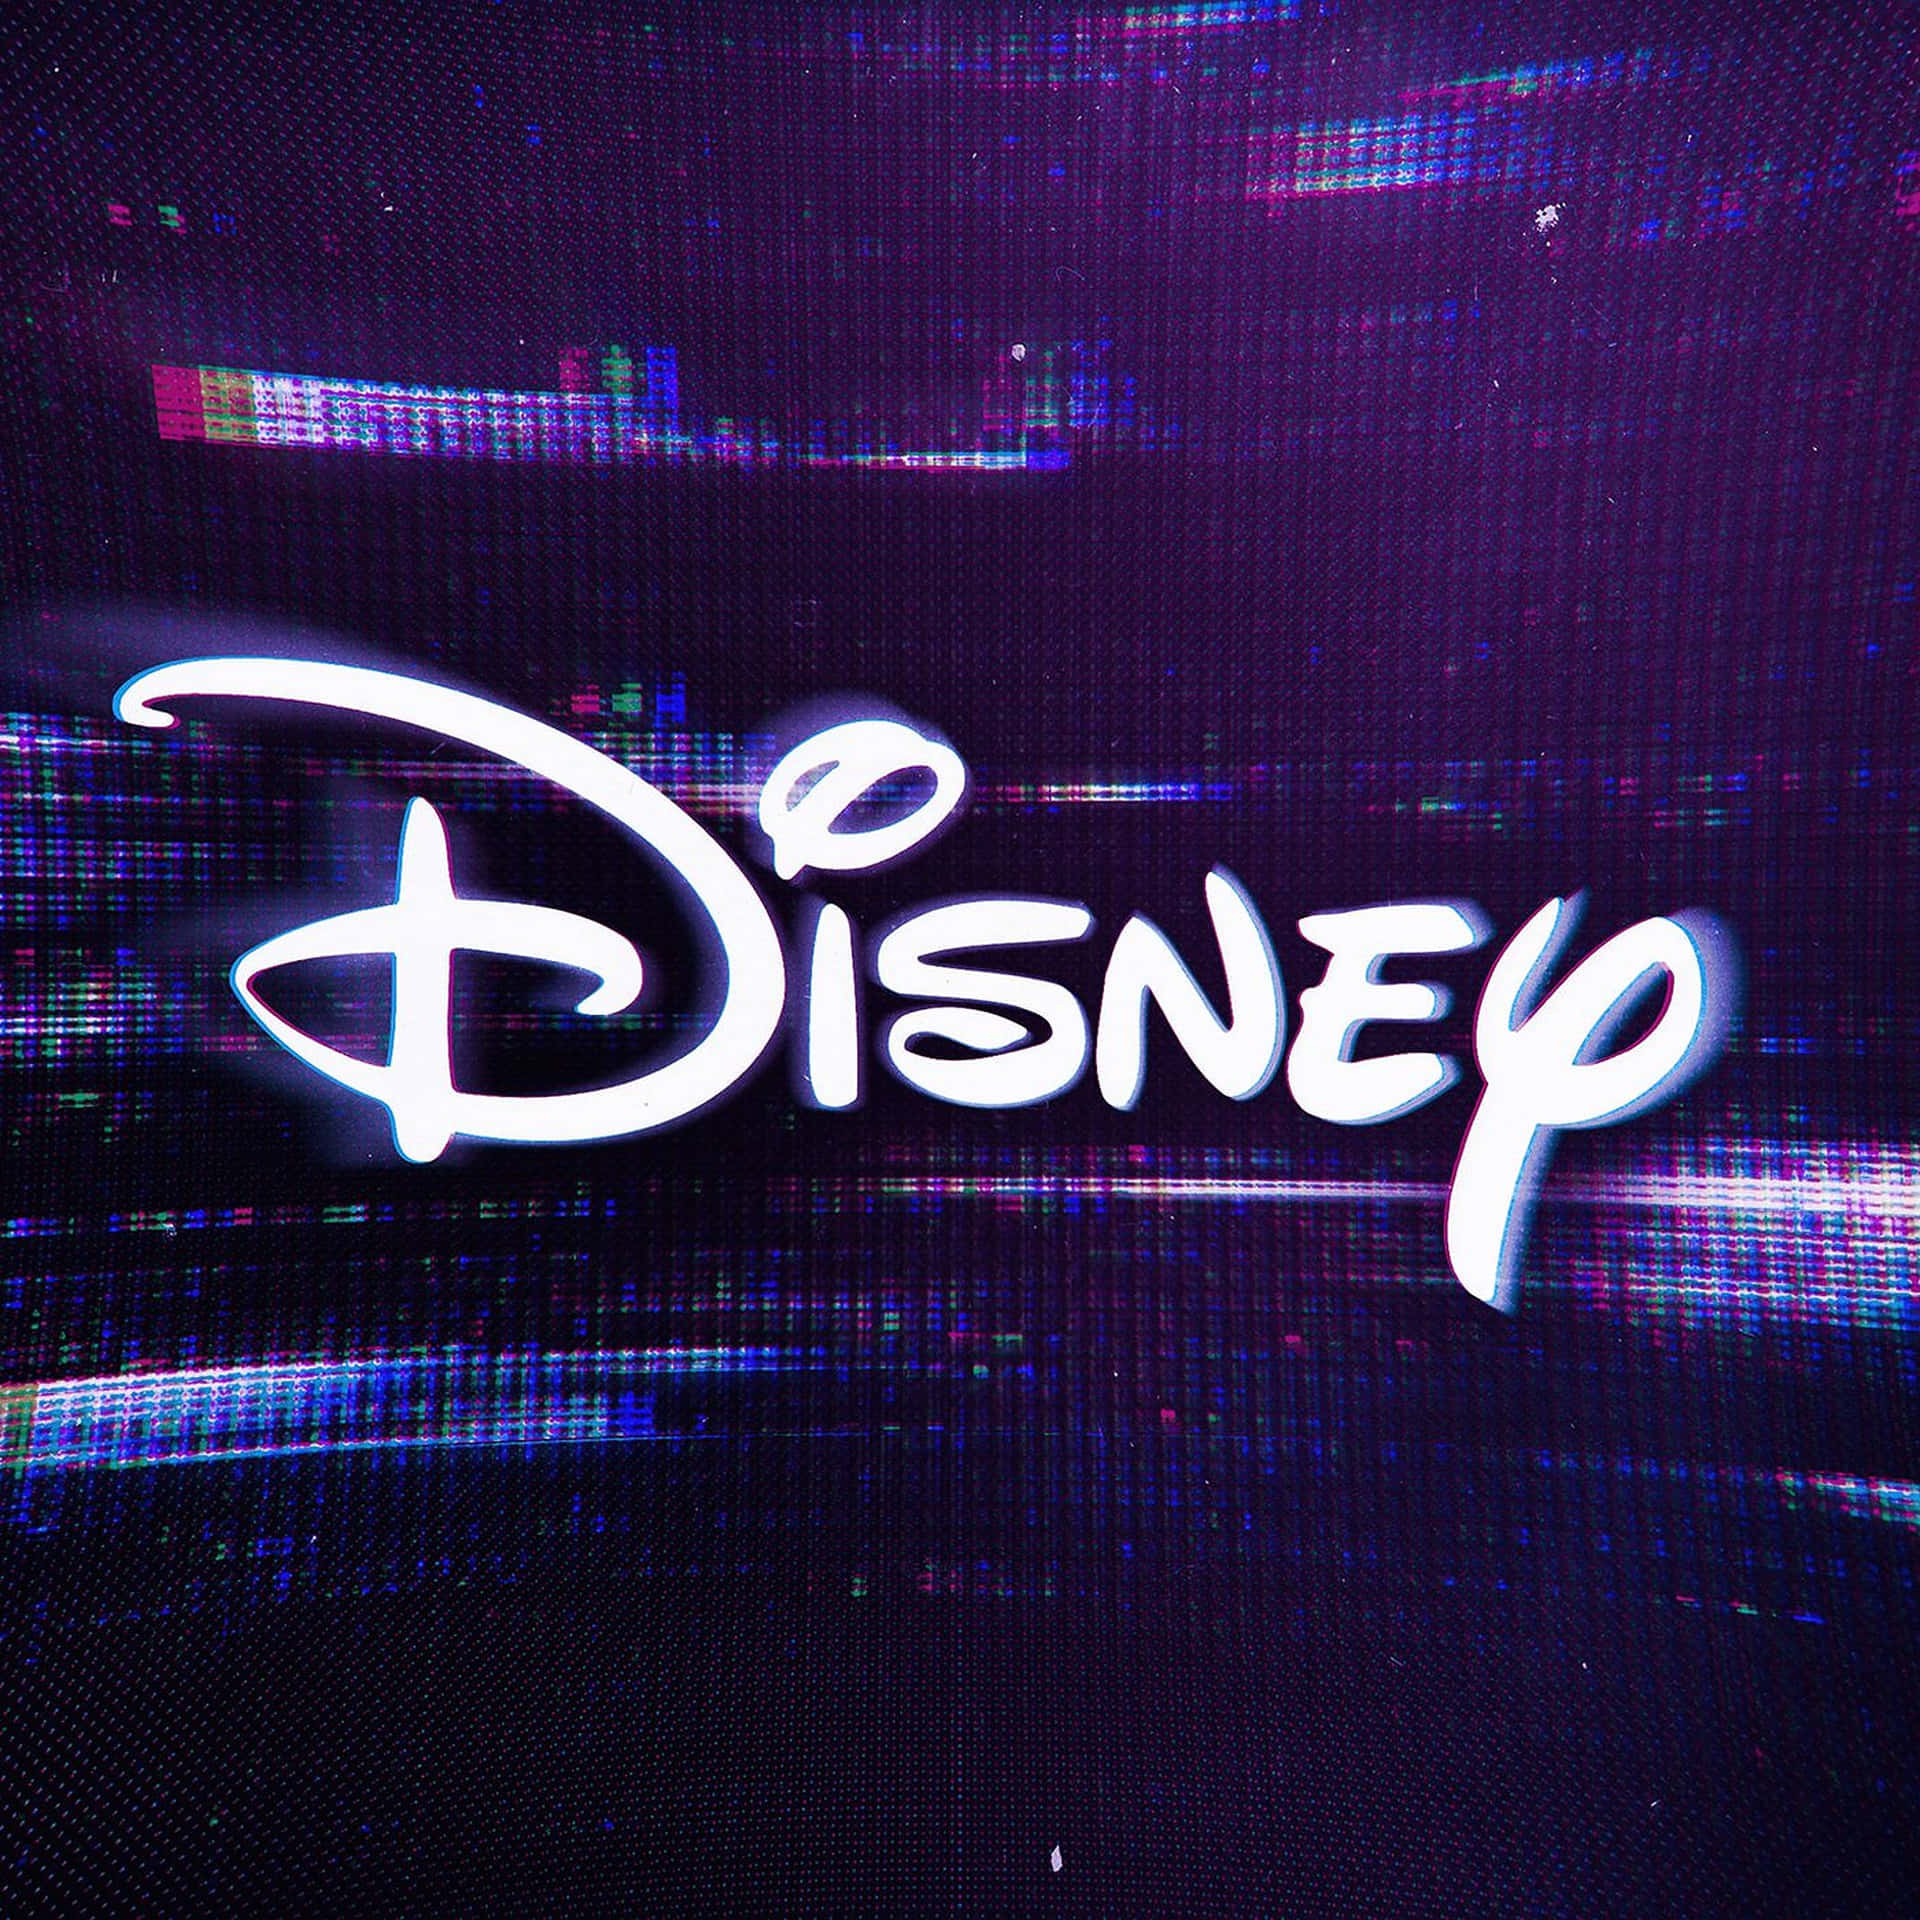 Disney Logo With Glitch Effect Wallpaper